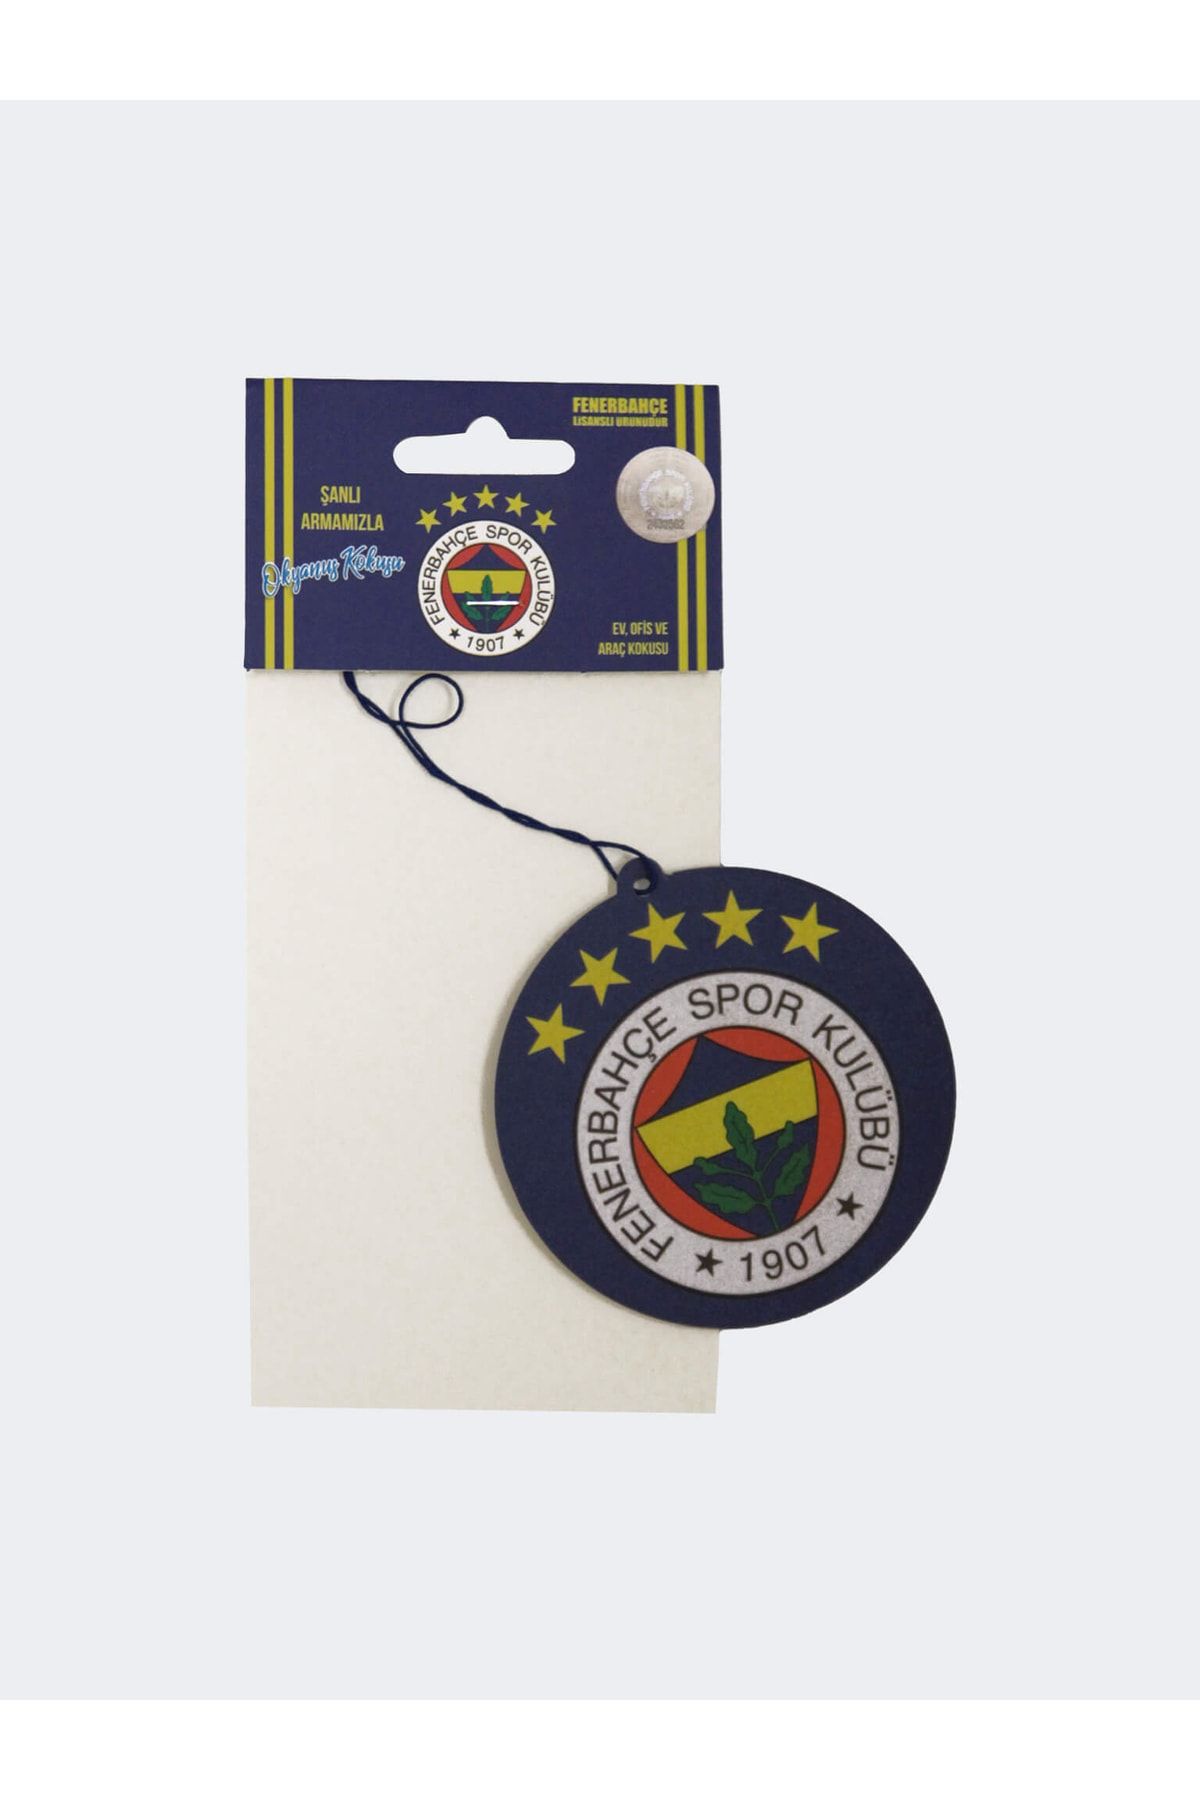 Fenerbahçe Fb 5 Yıldız Arma Oto Kokusu